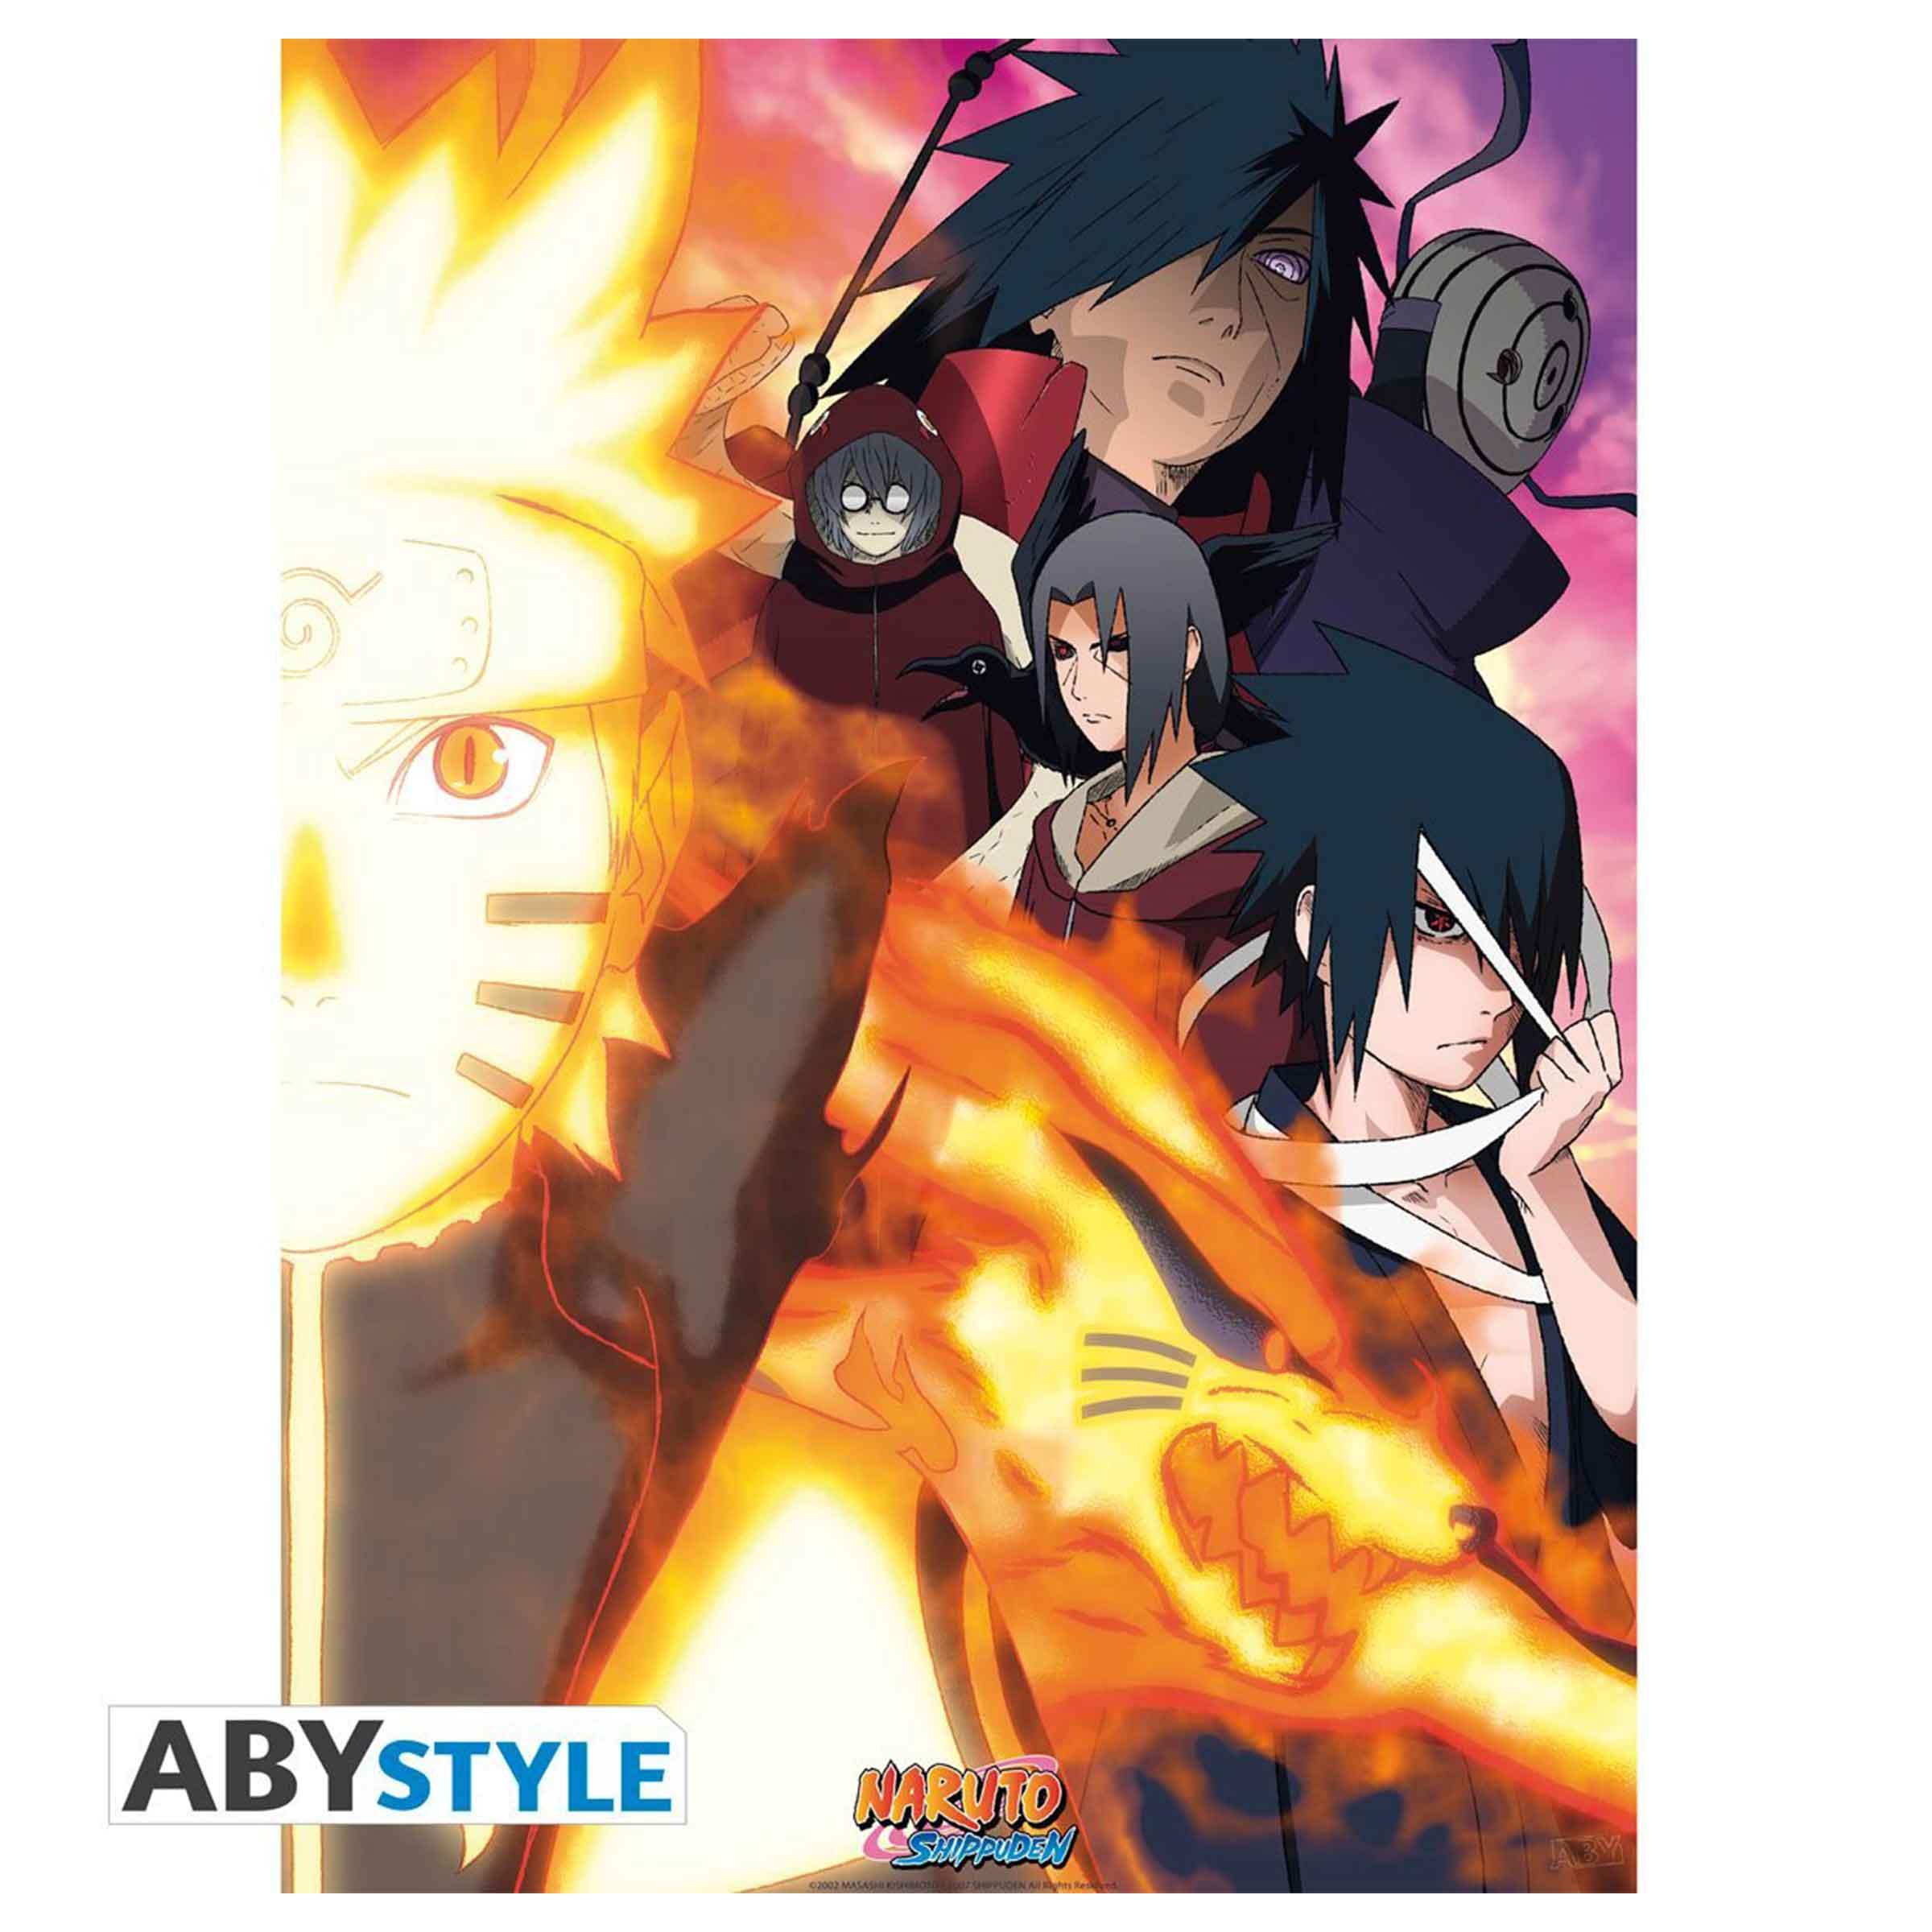 Anime Naruto Shippuden Characters Manga Poster